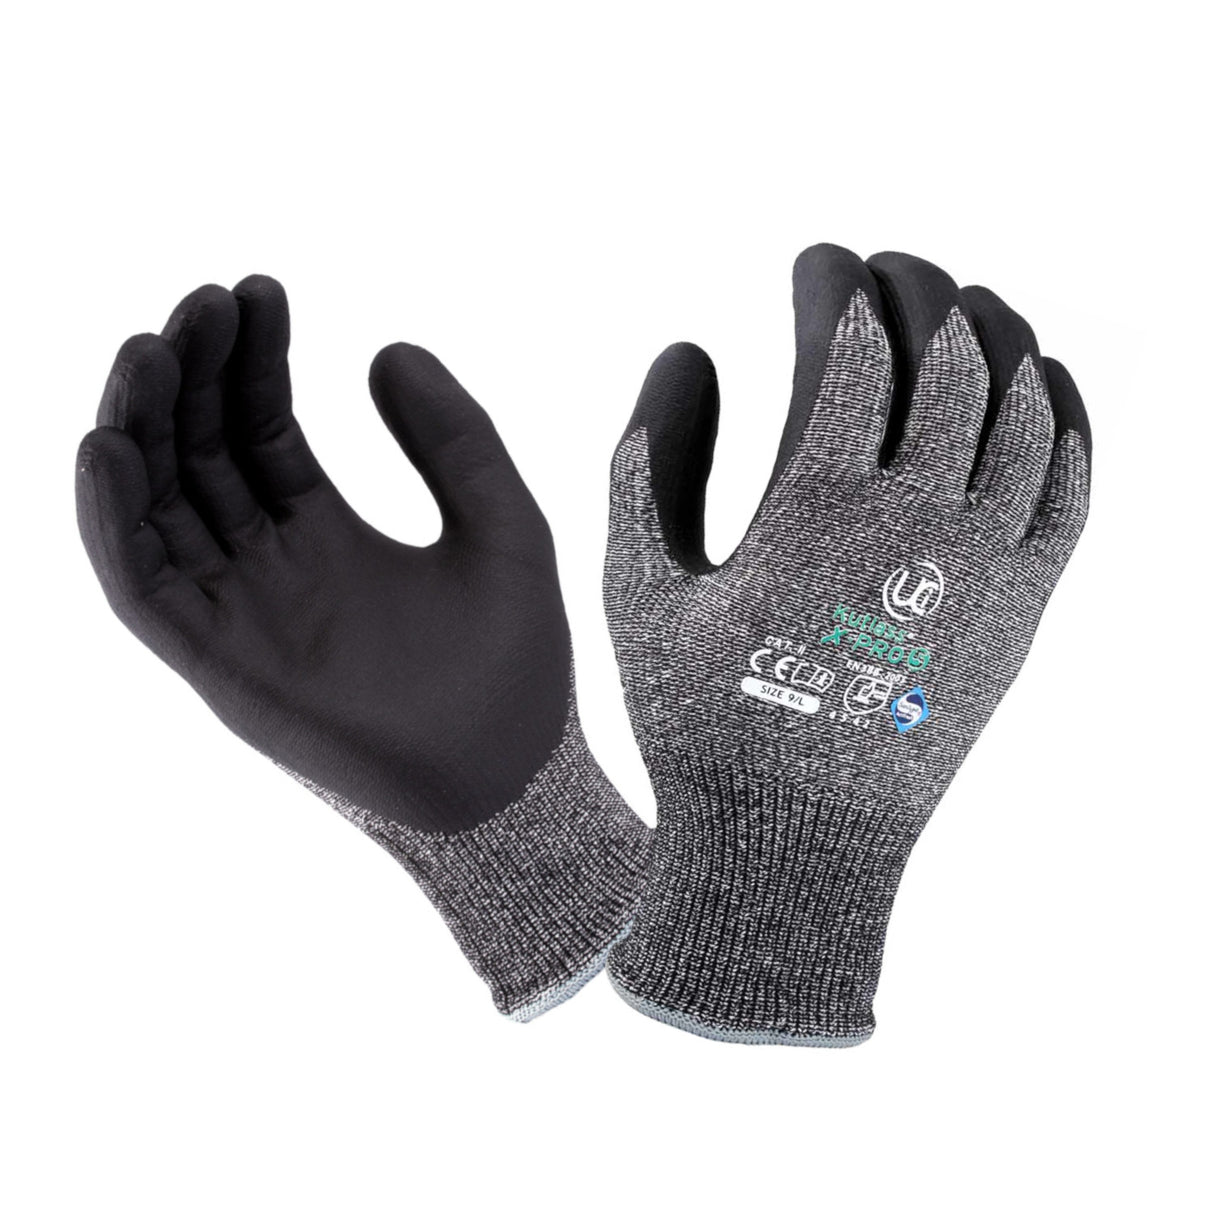 Ultimate Industrial Kutlass® XPRO5 Work Gloves Cut-5 Resistant Nitrile Coating